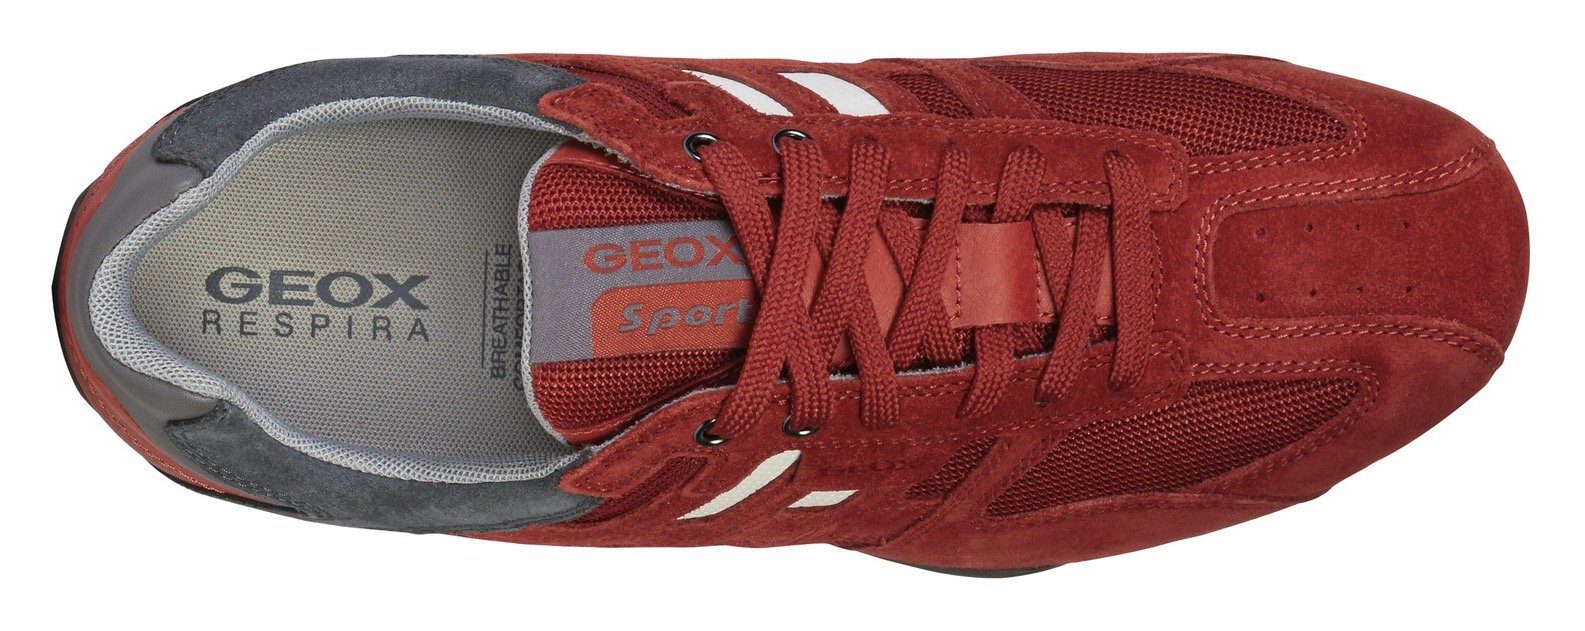 Spezial im Sneaker Snake Materialmix Membrane mit Geox rot-grau Geox